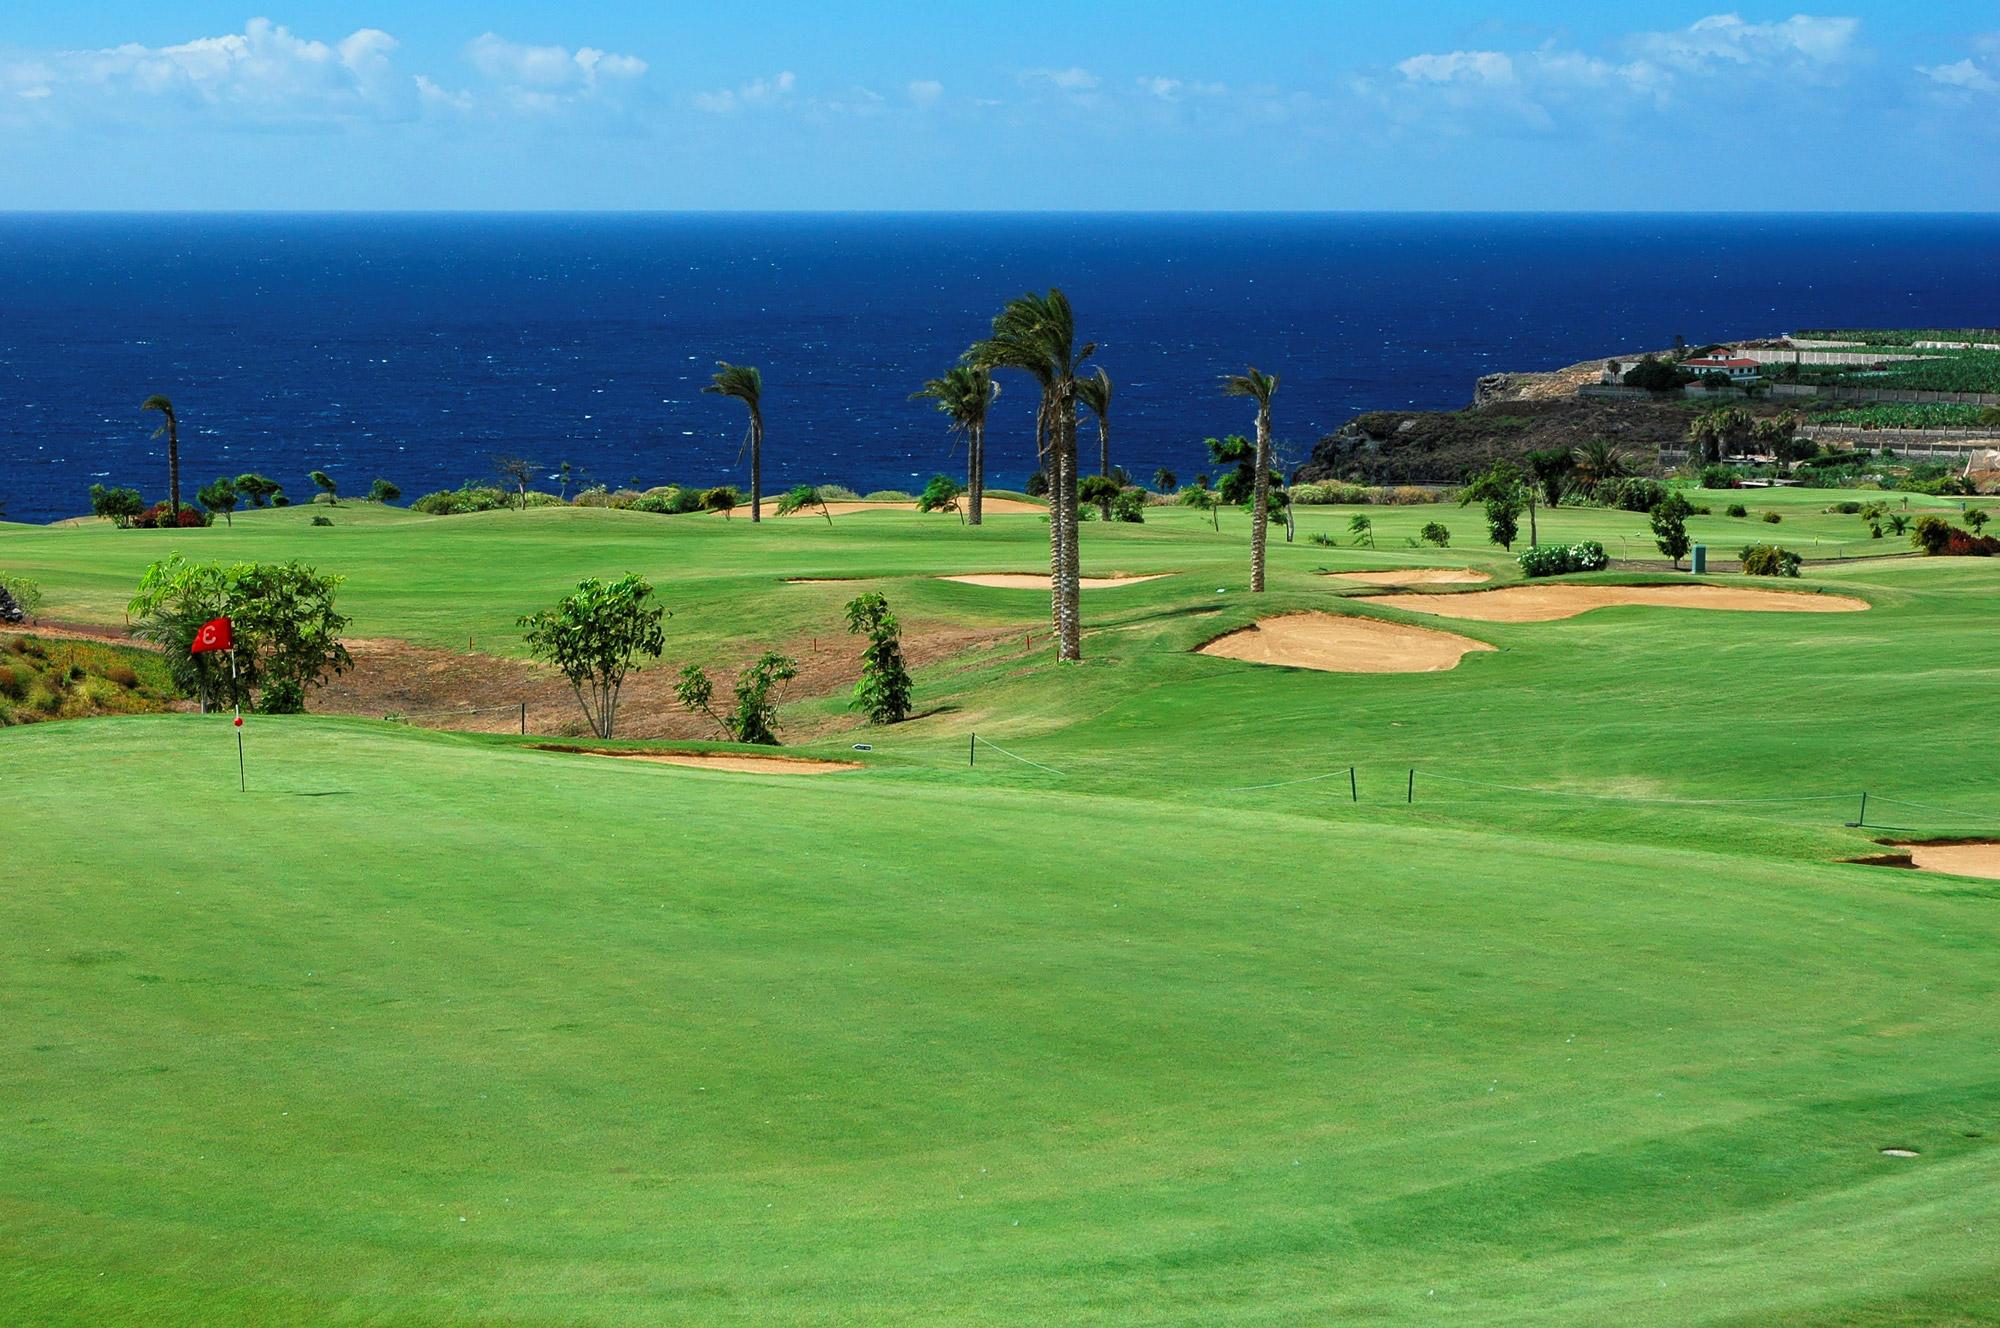 The Santa Maria Golf Course's impressive golf course situated in staggering Costa Del Sol.